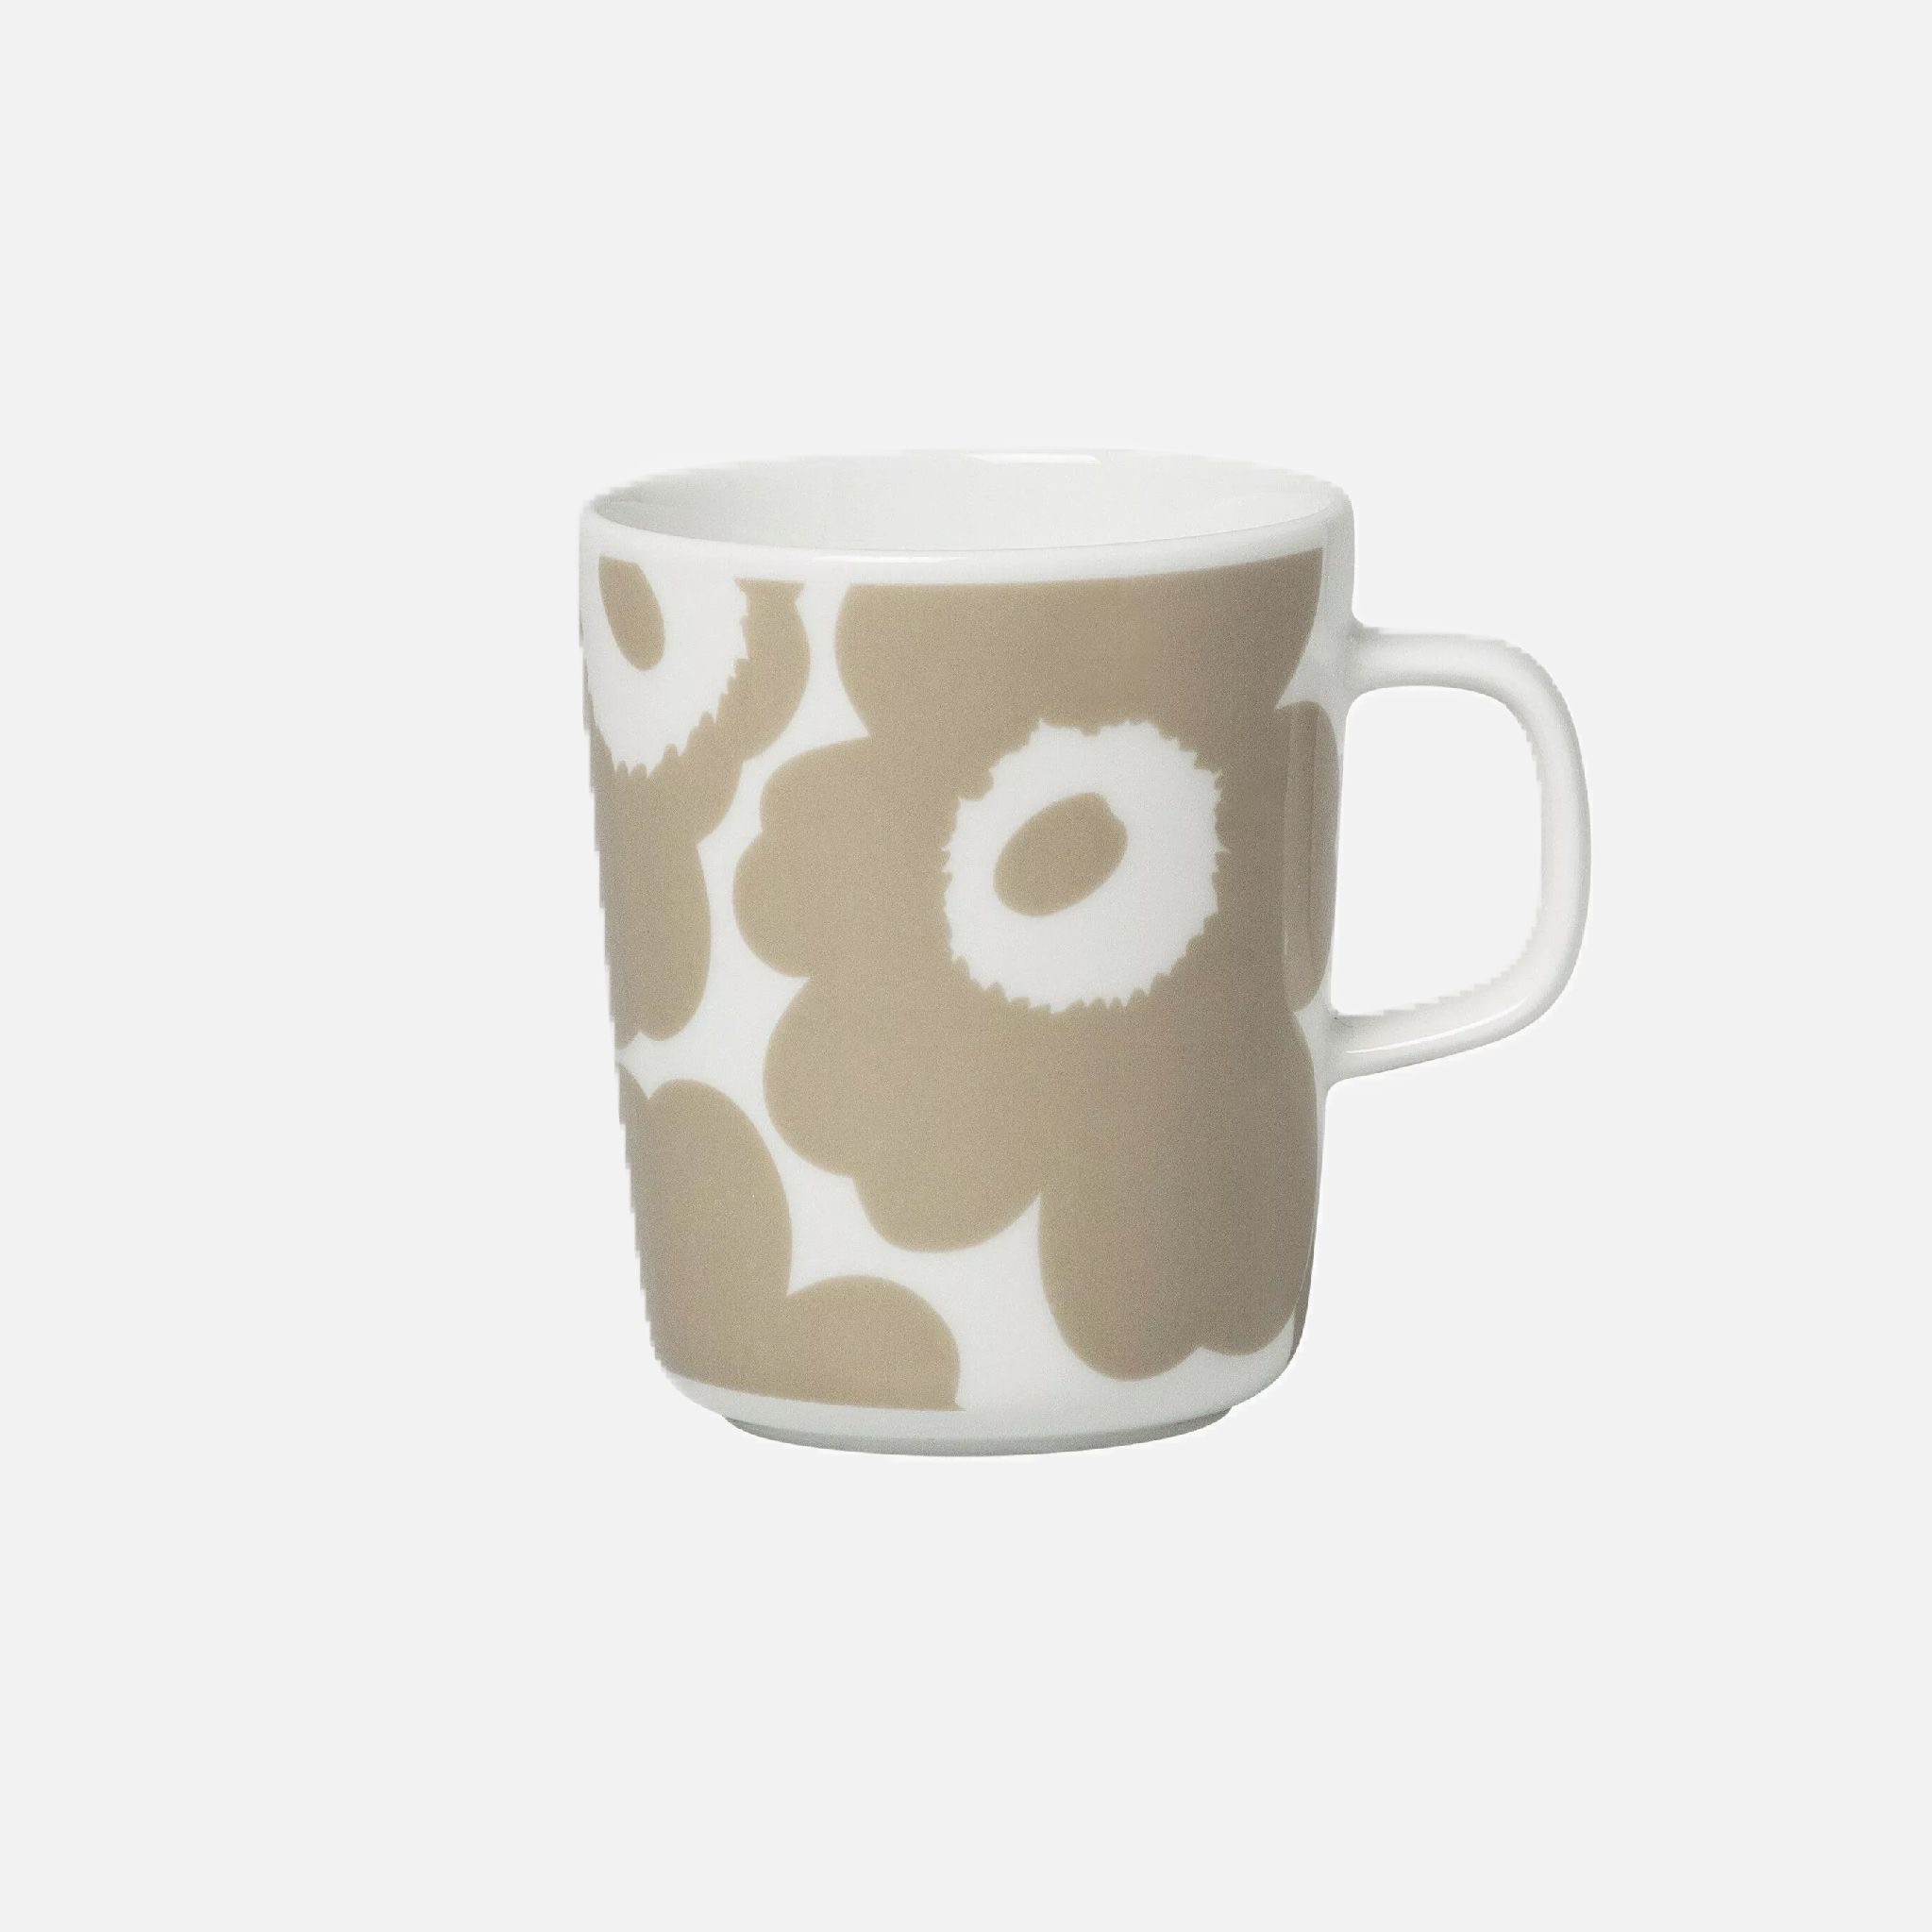 Unikko mug 2,5dl beige/white